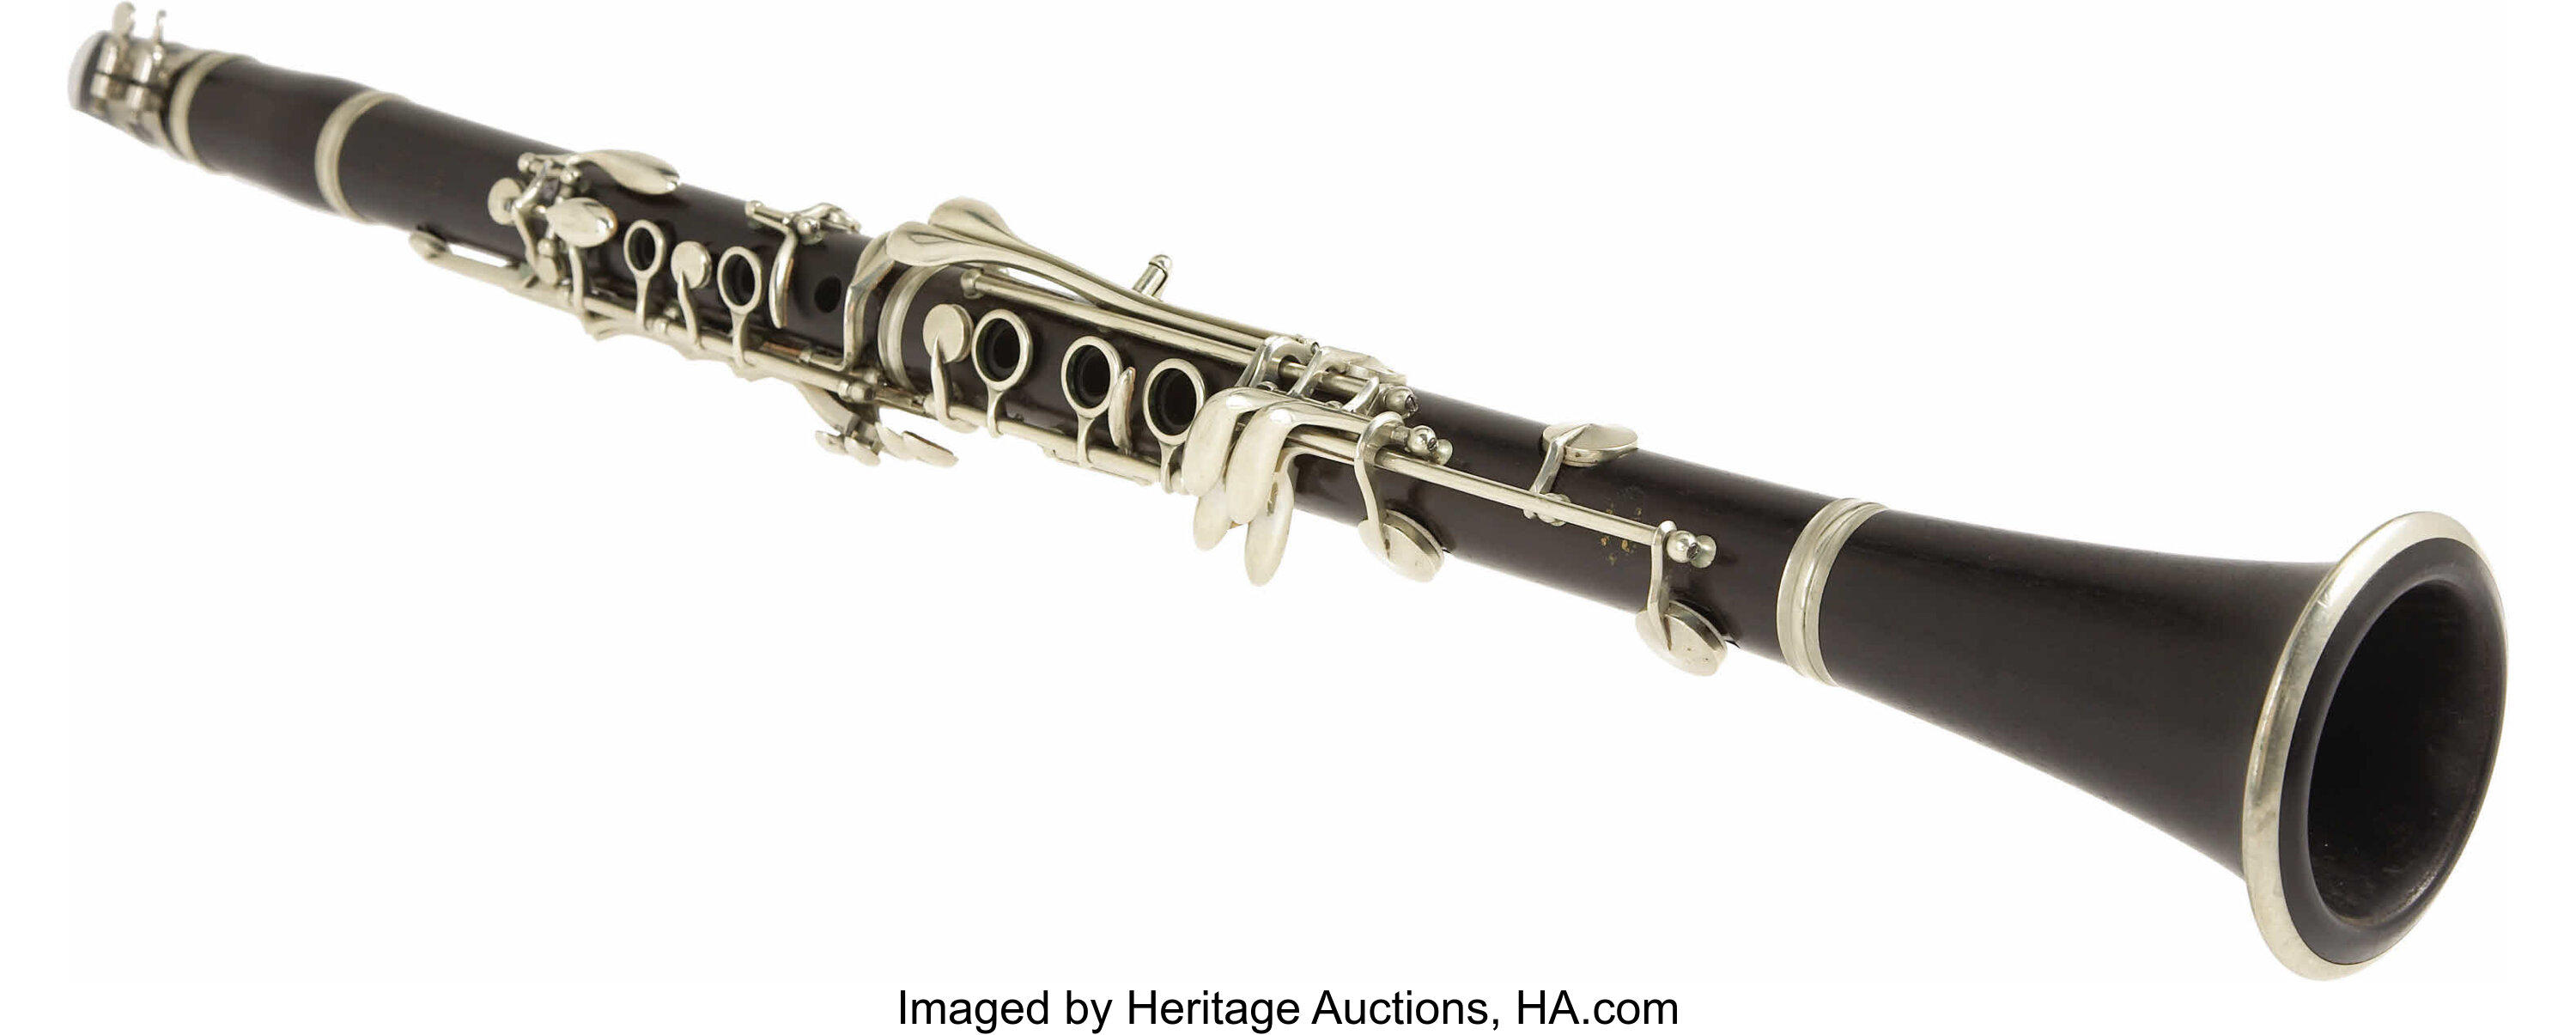 Benny Goodman's Clarinet. Dubbed 